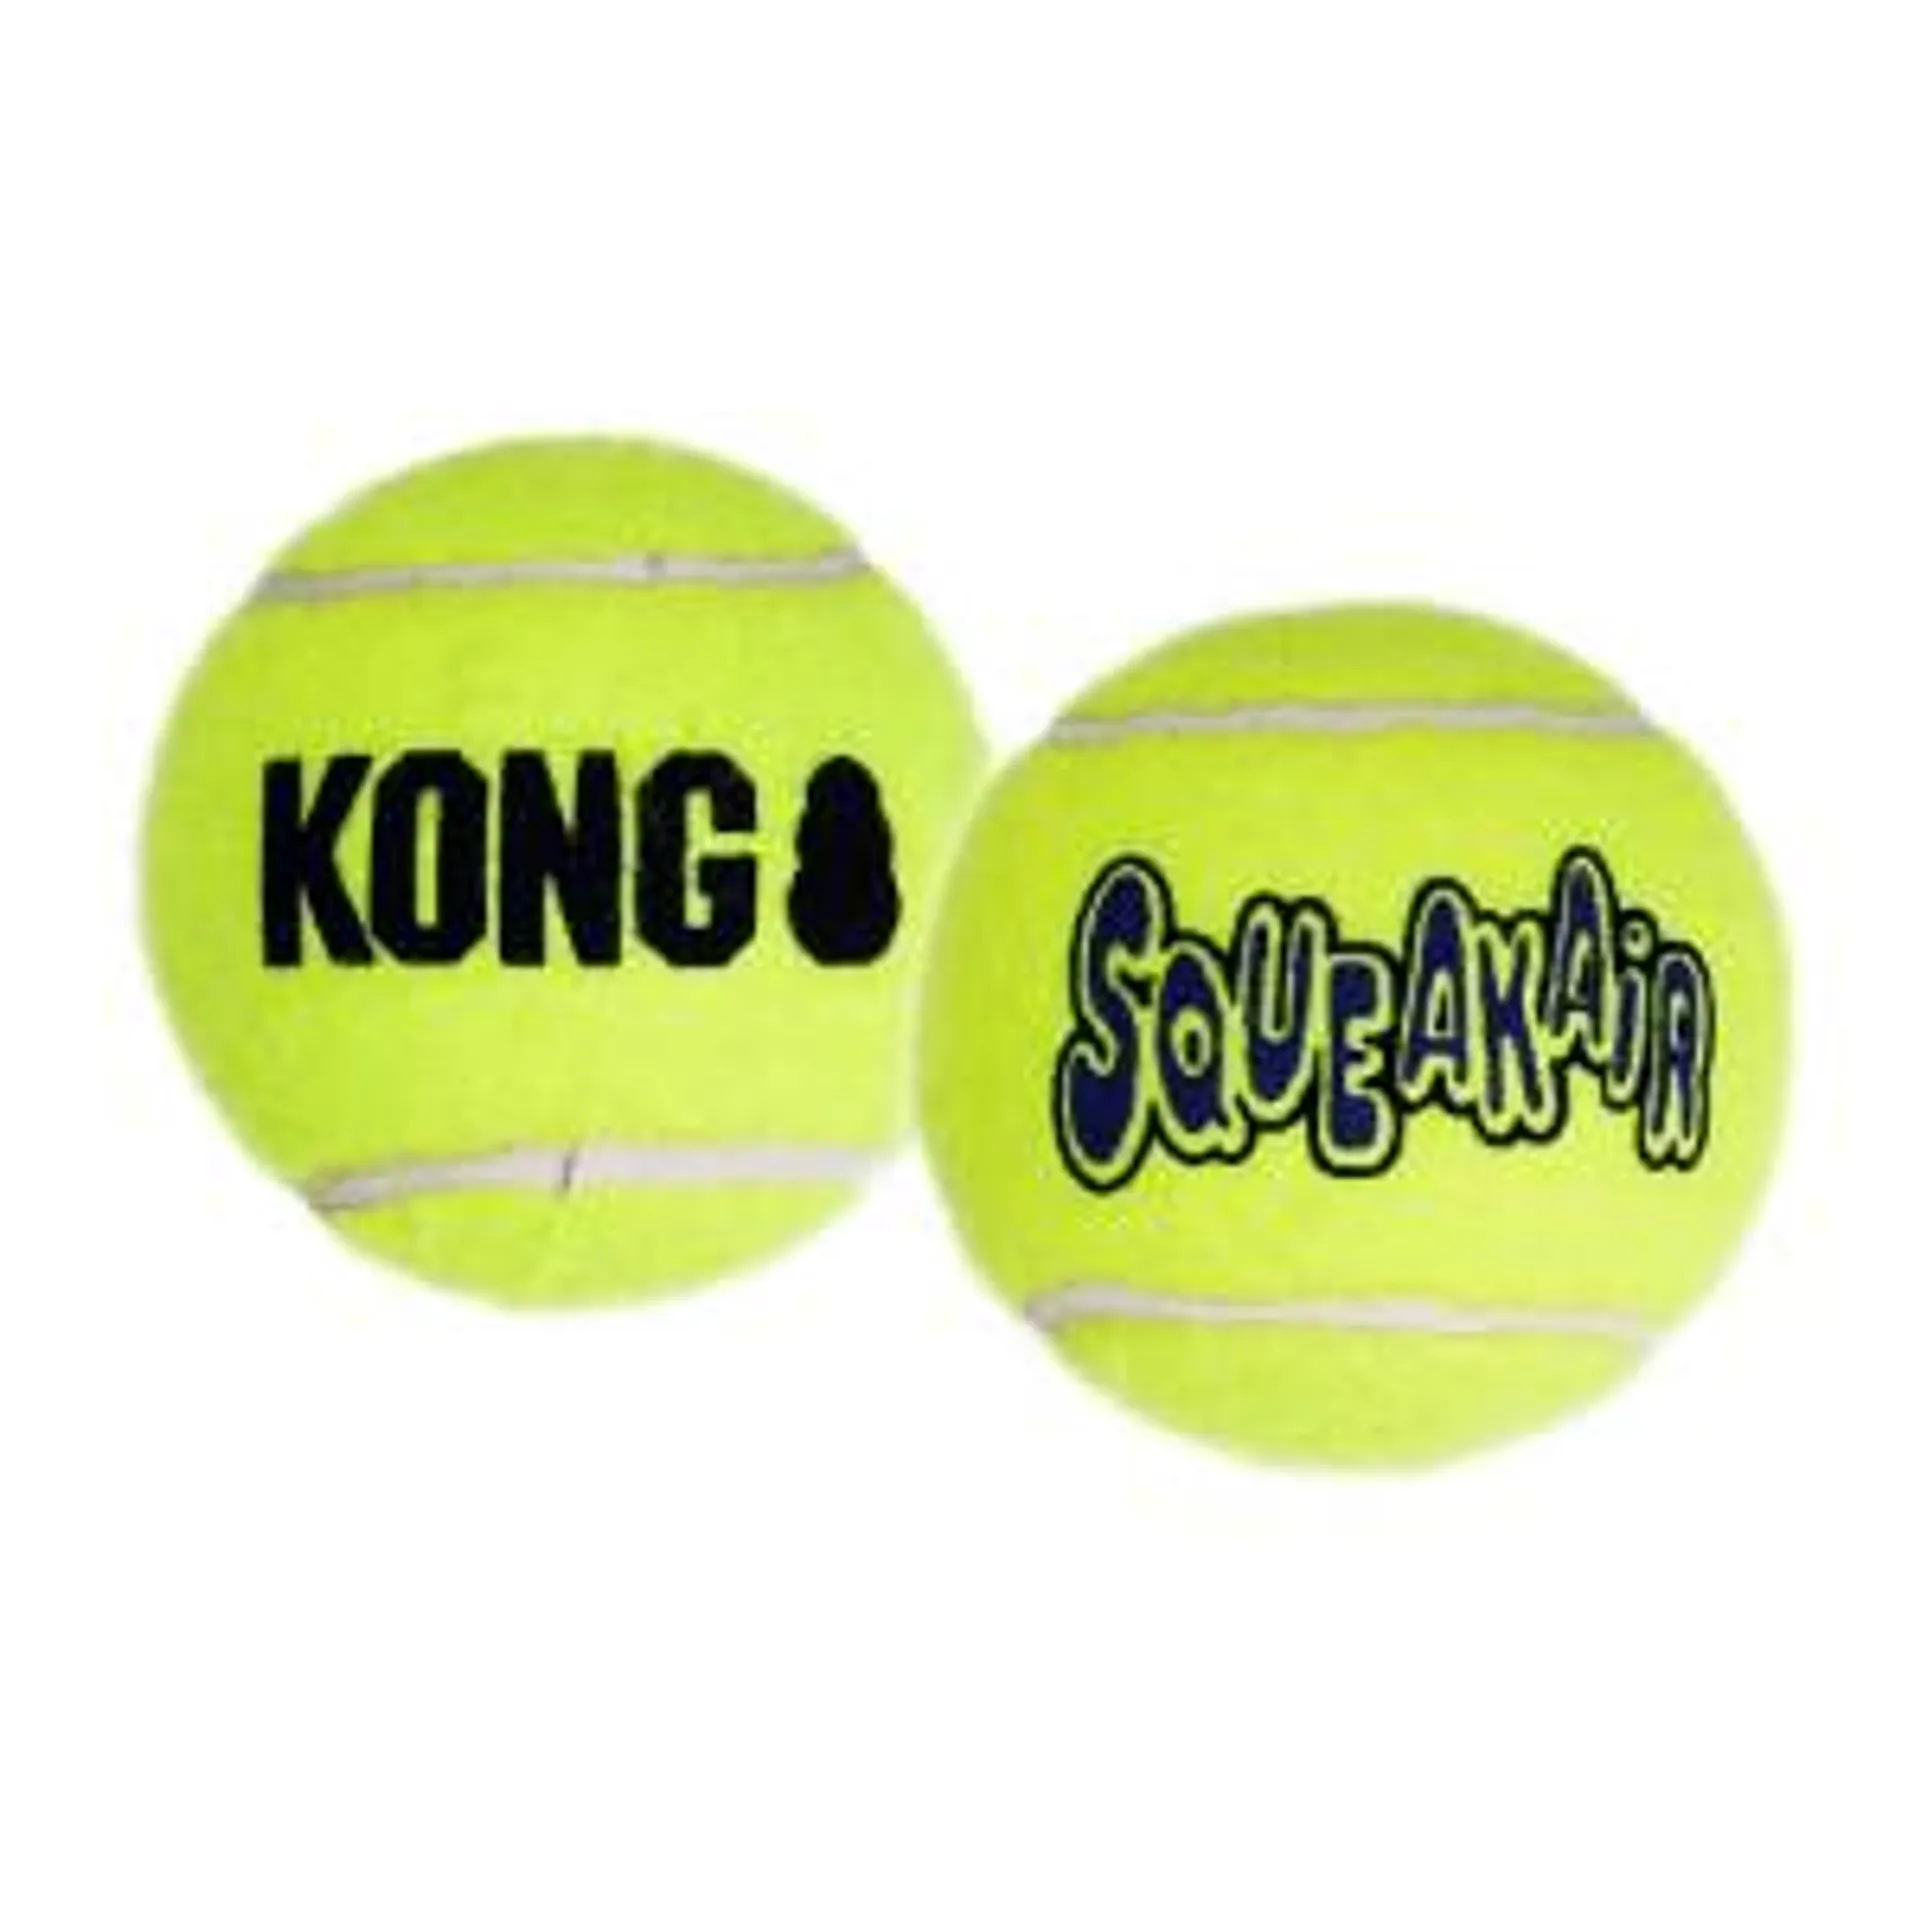 Kong SqueakAir Balls Dog Toy 6 Pack